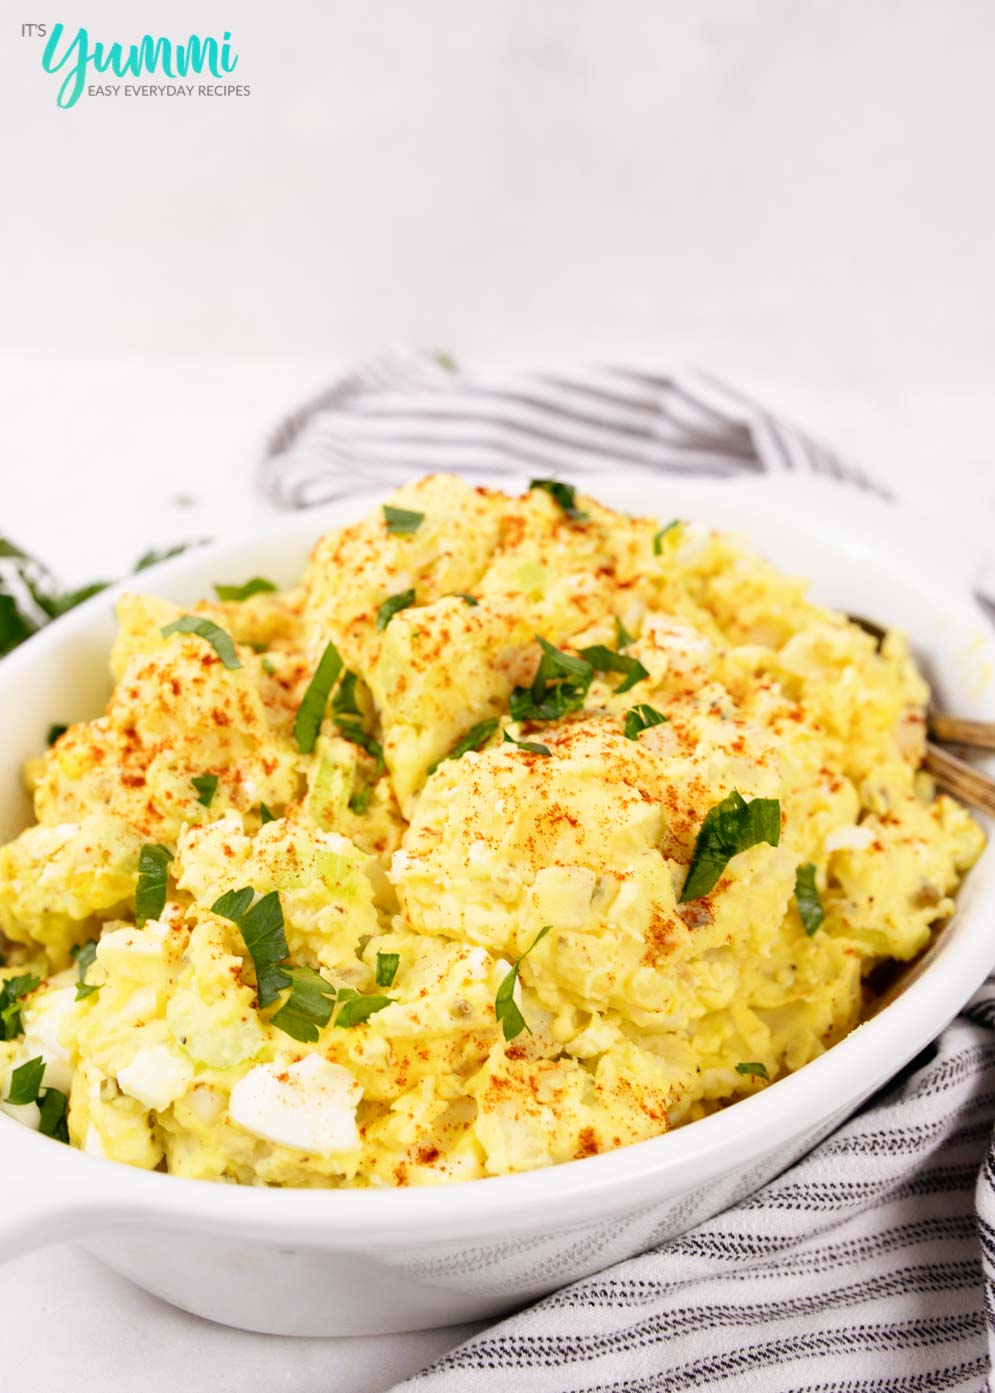 Southern Style Mustard Potato Salad - Easy Budget Recipes by Its Yummi